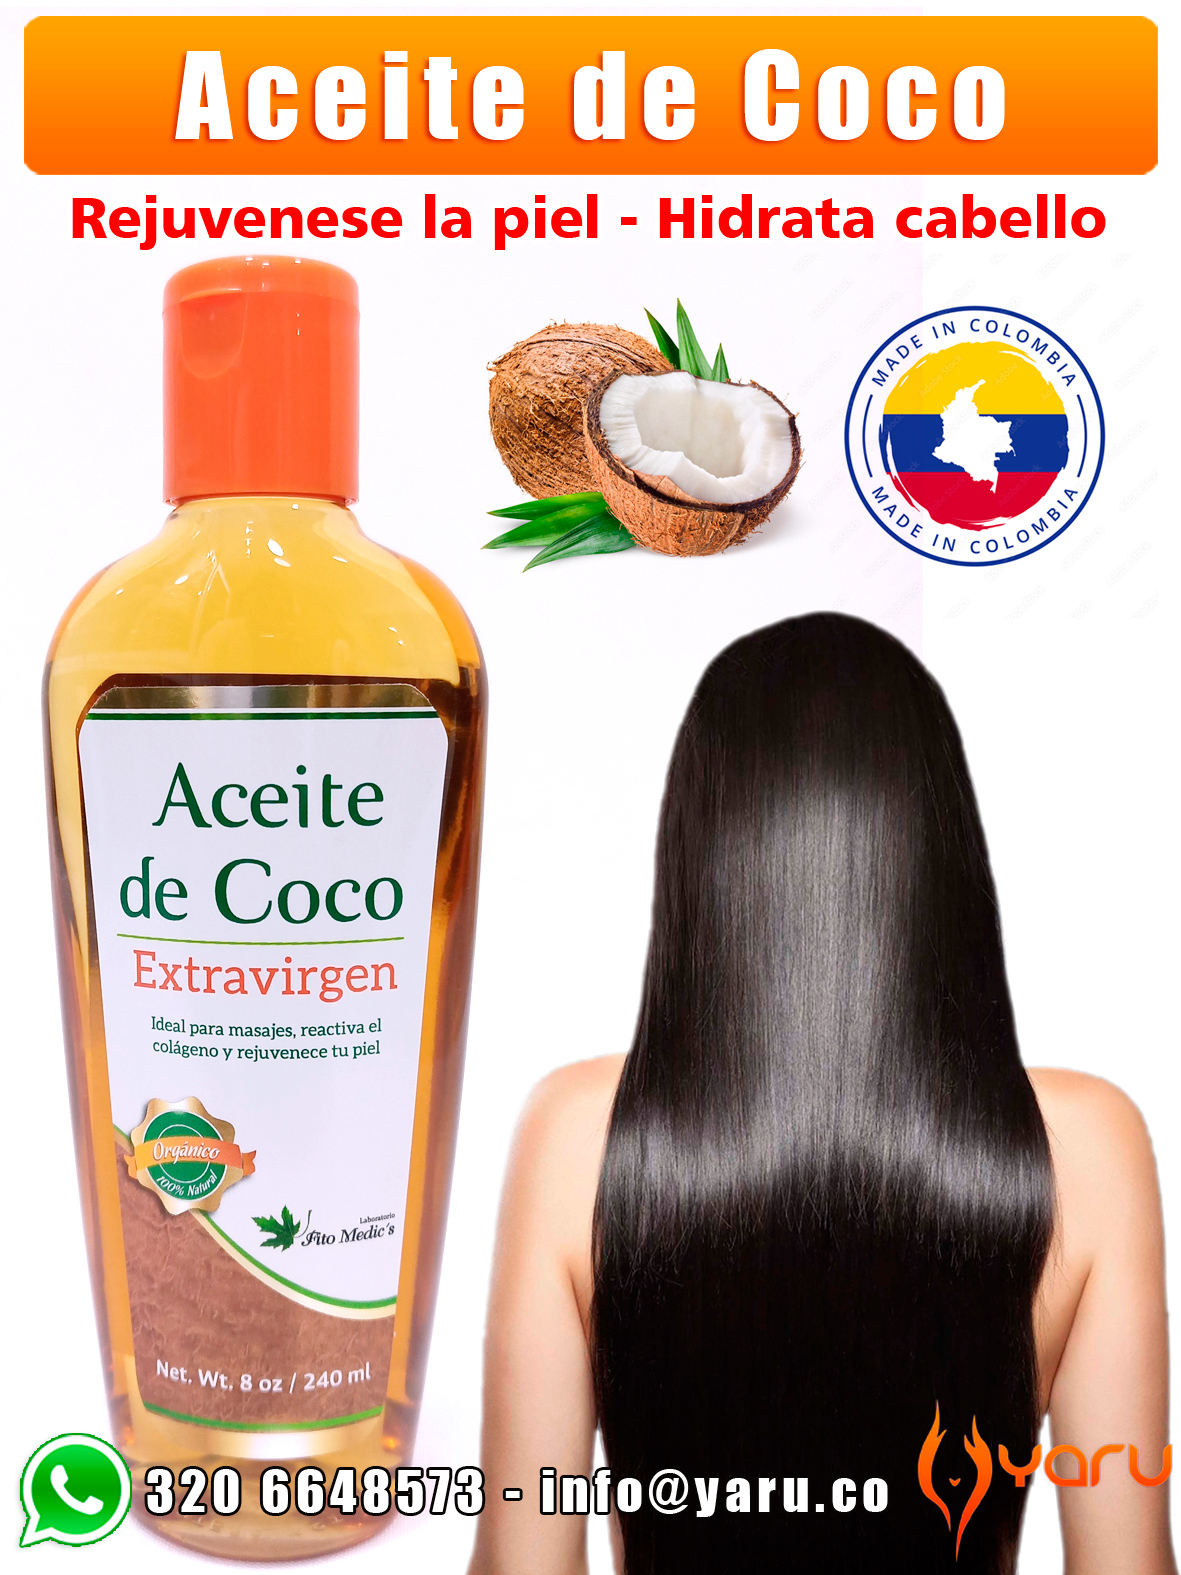 aceite de coco colombiano rejuvenece piel hidrata cabello